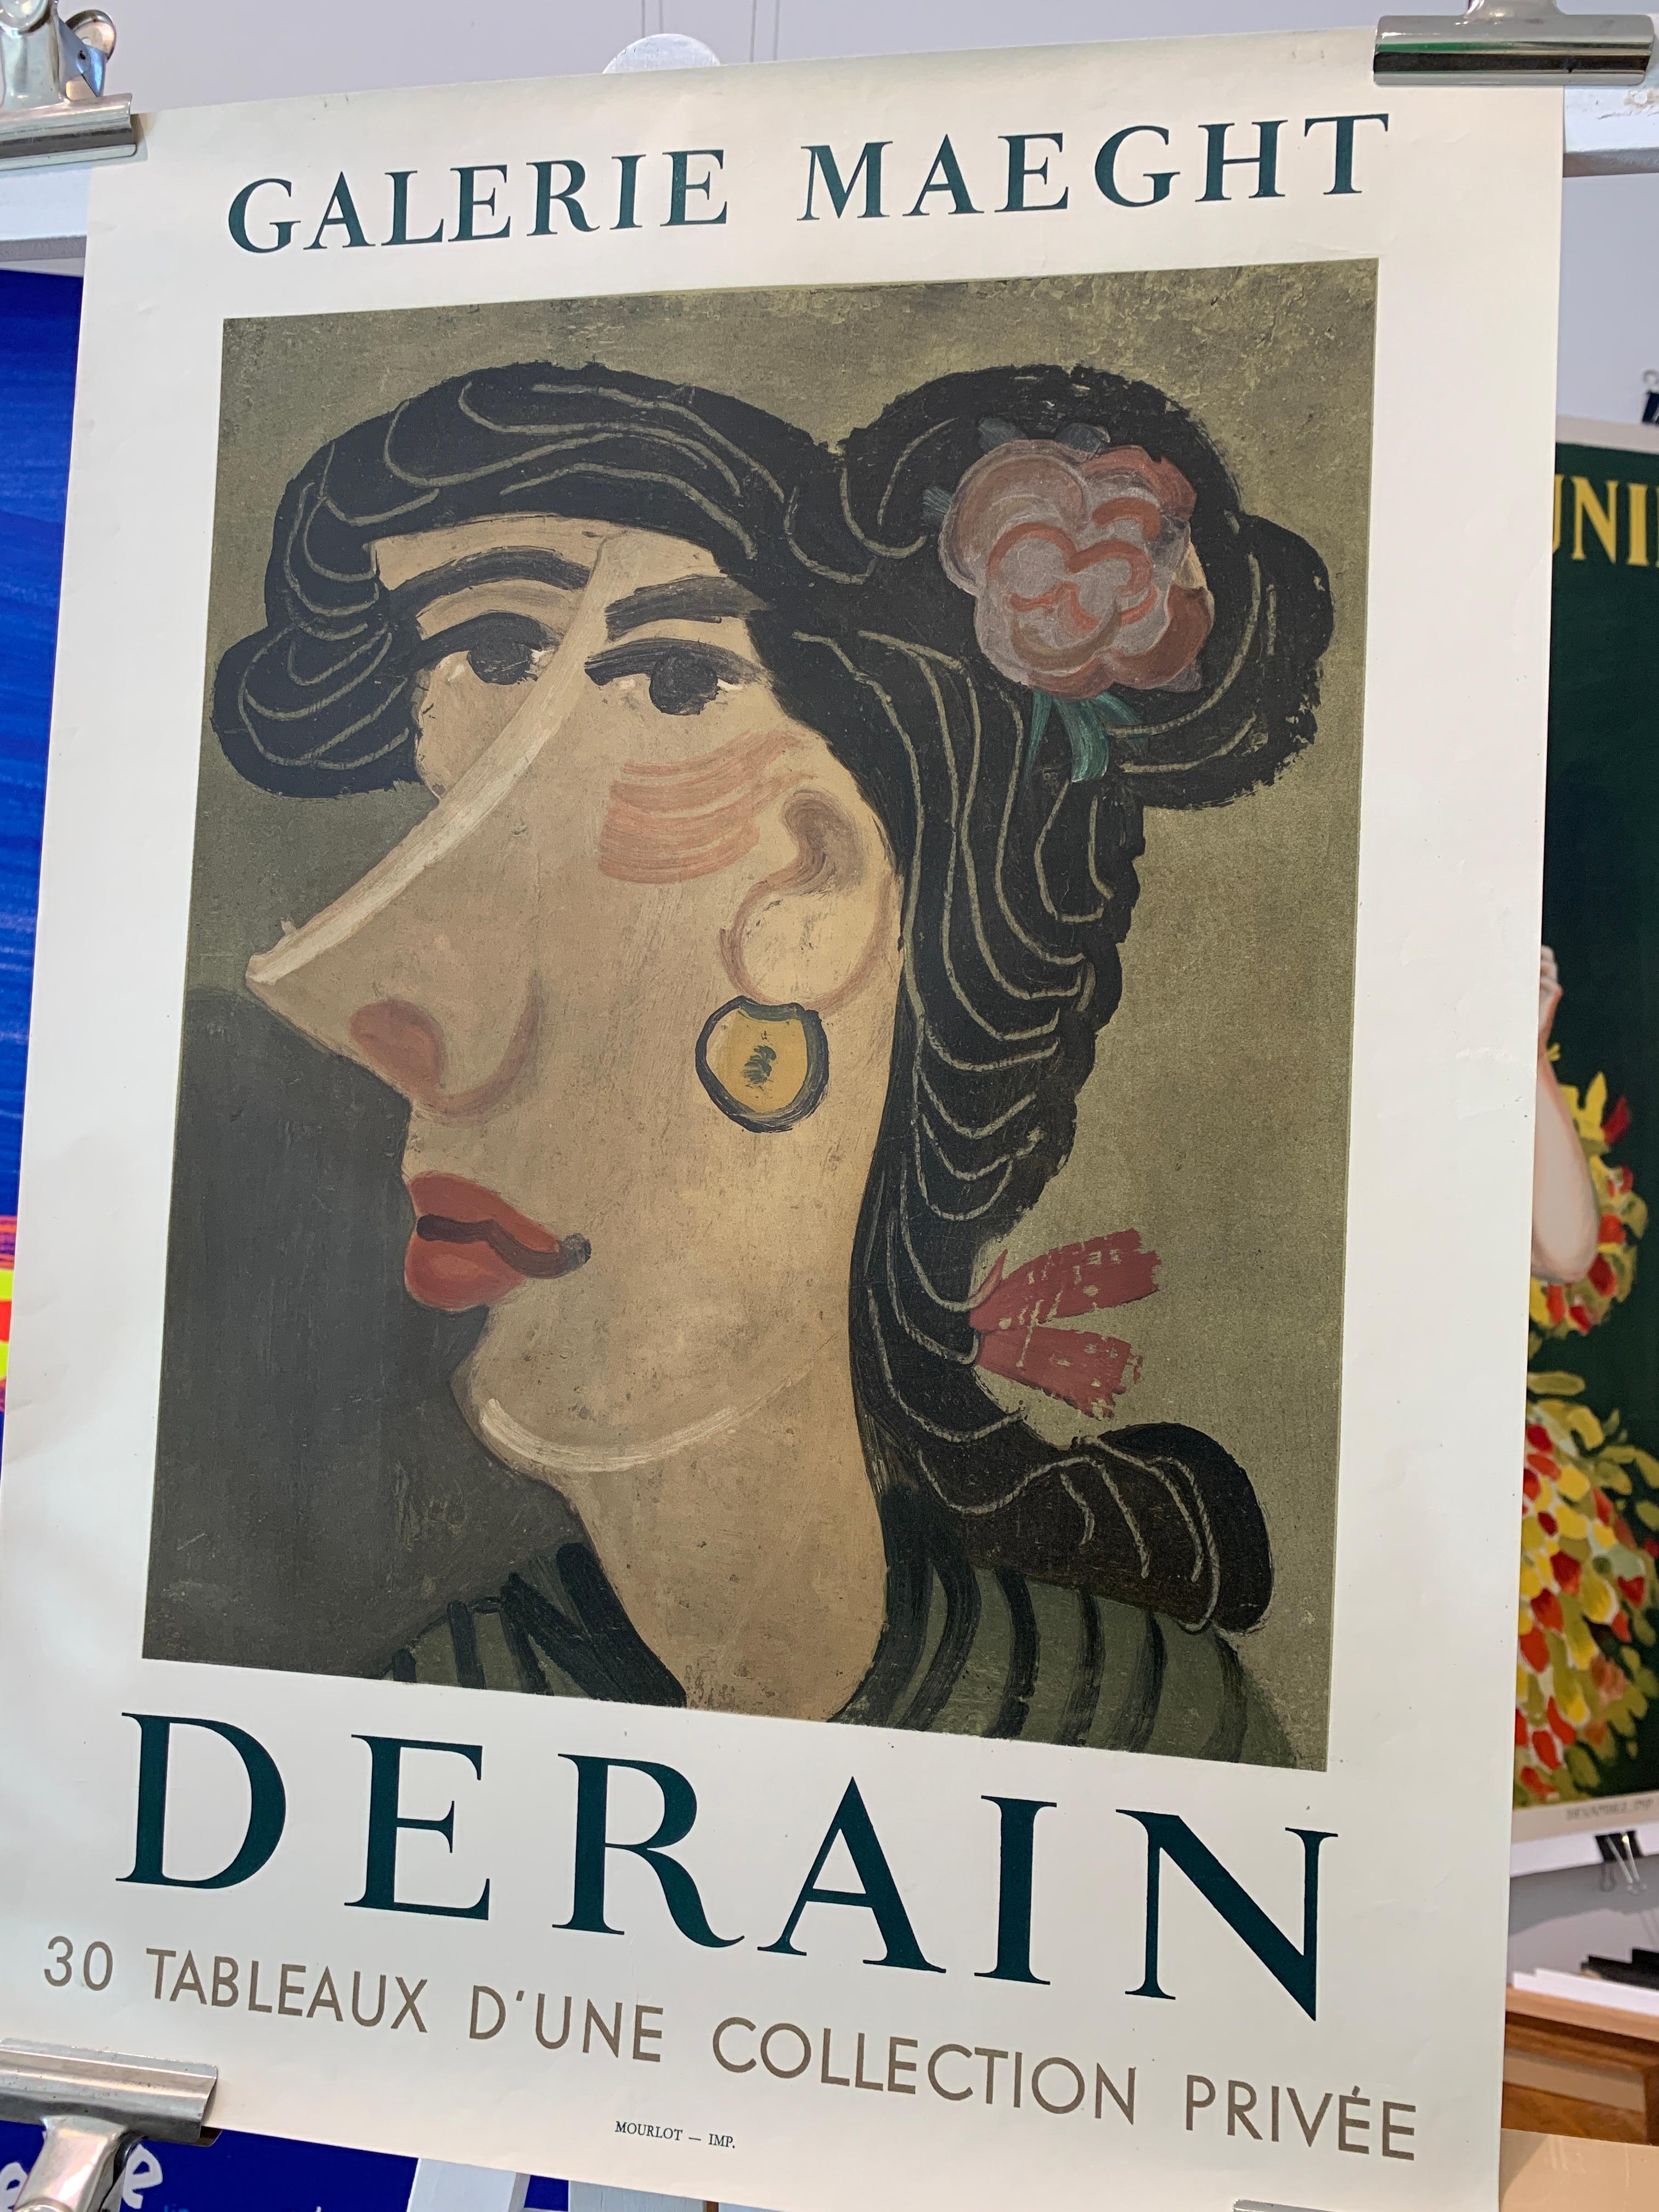 Modern 'Derain' Gaierie Maeght Original Vintage Poster  For Sale